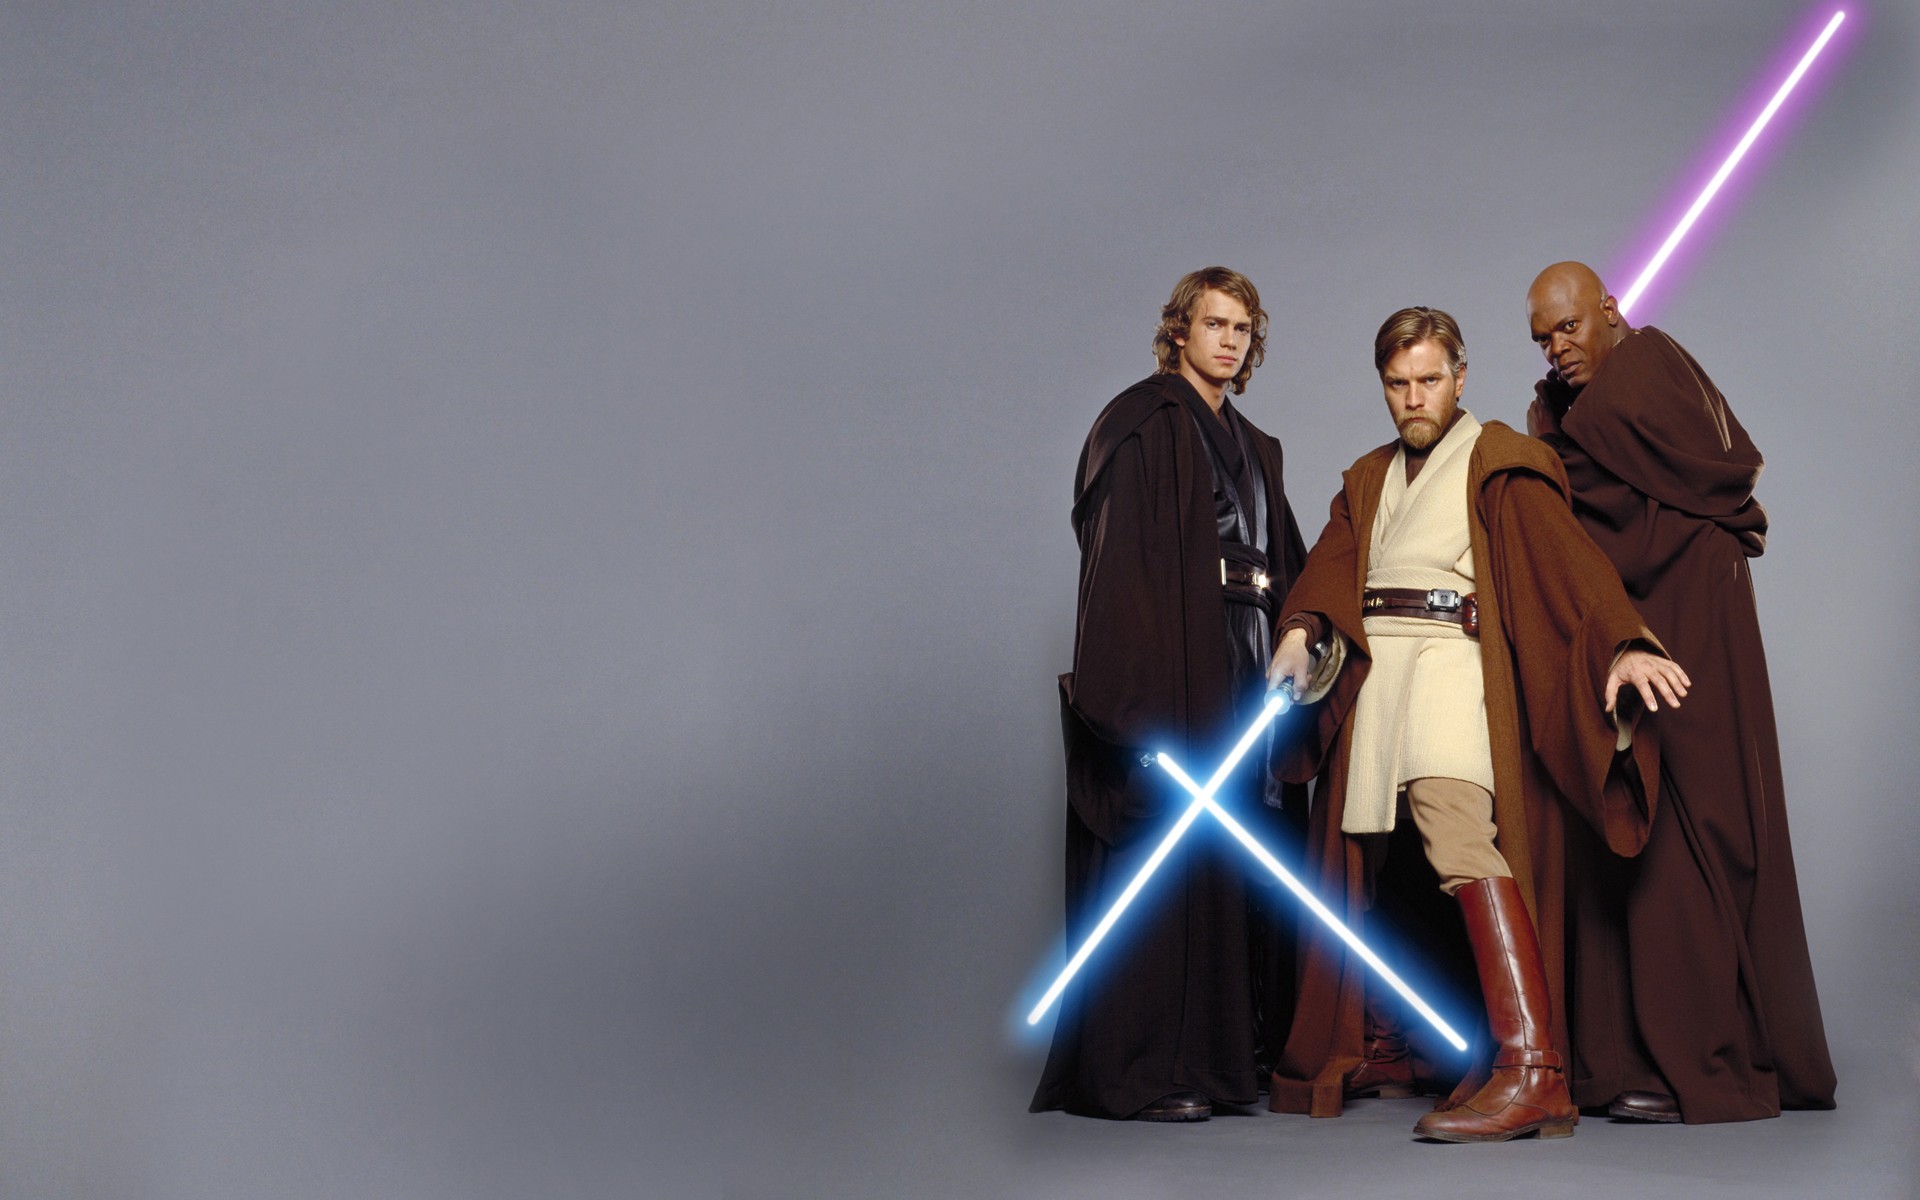 Anakin Skywalker Wallpaper for Desktop